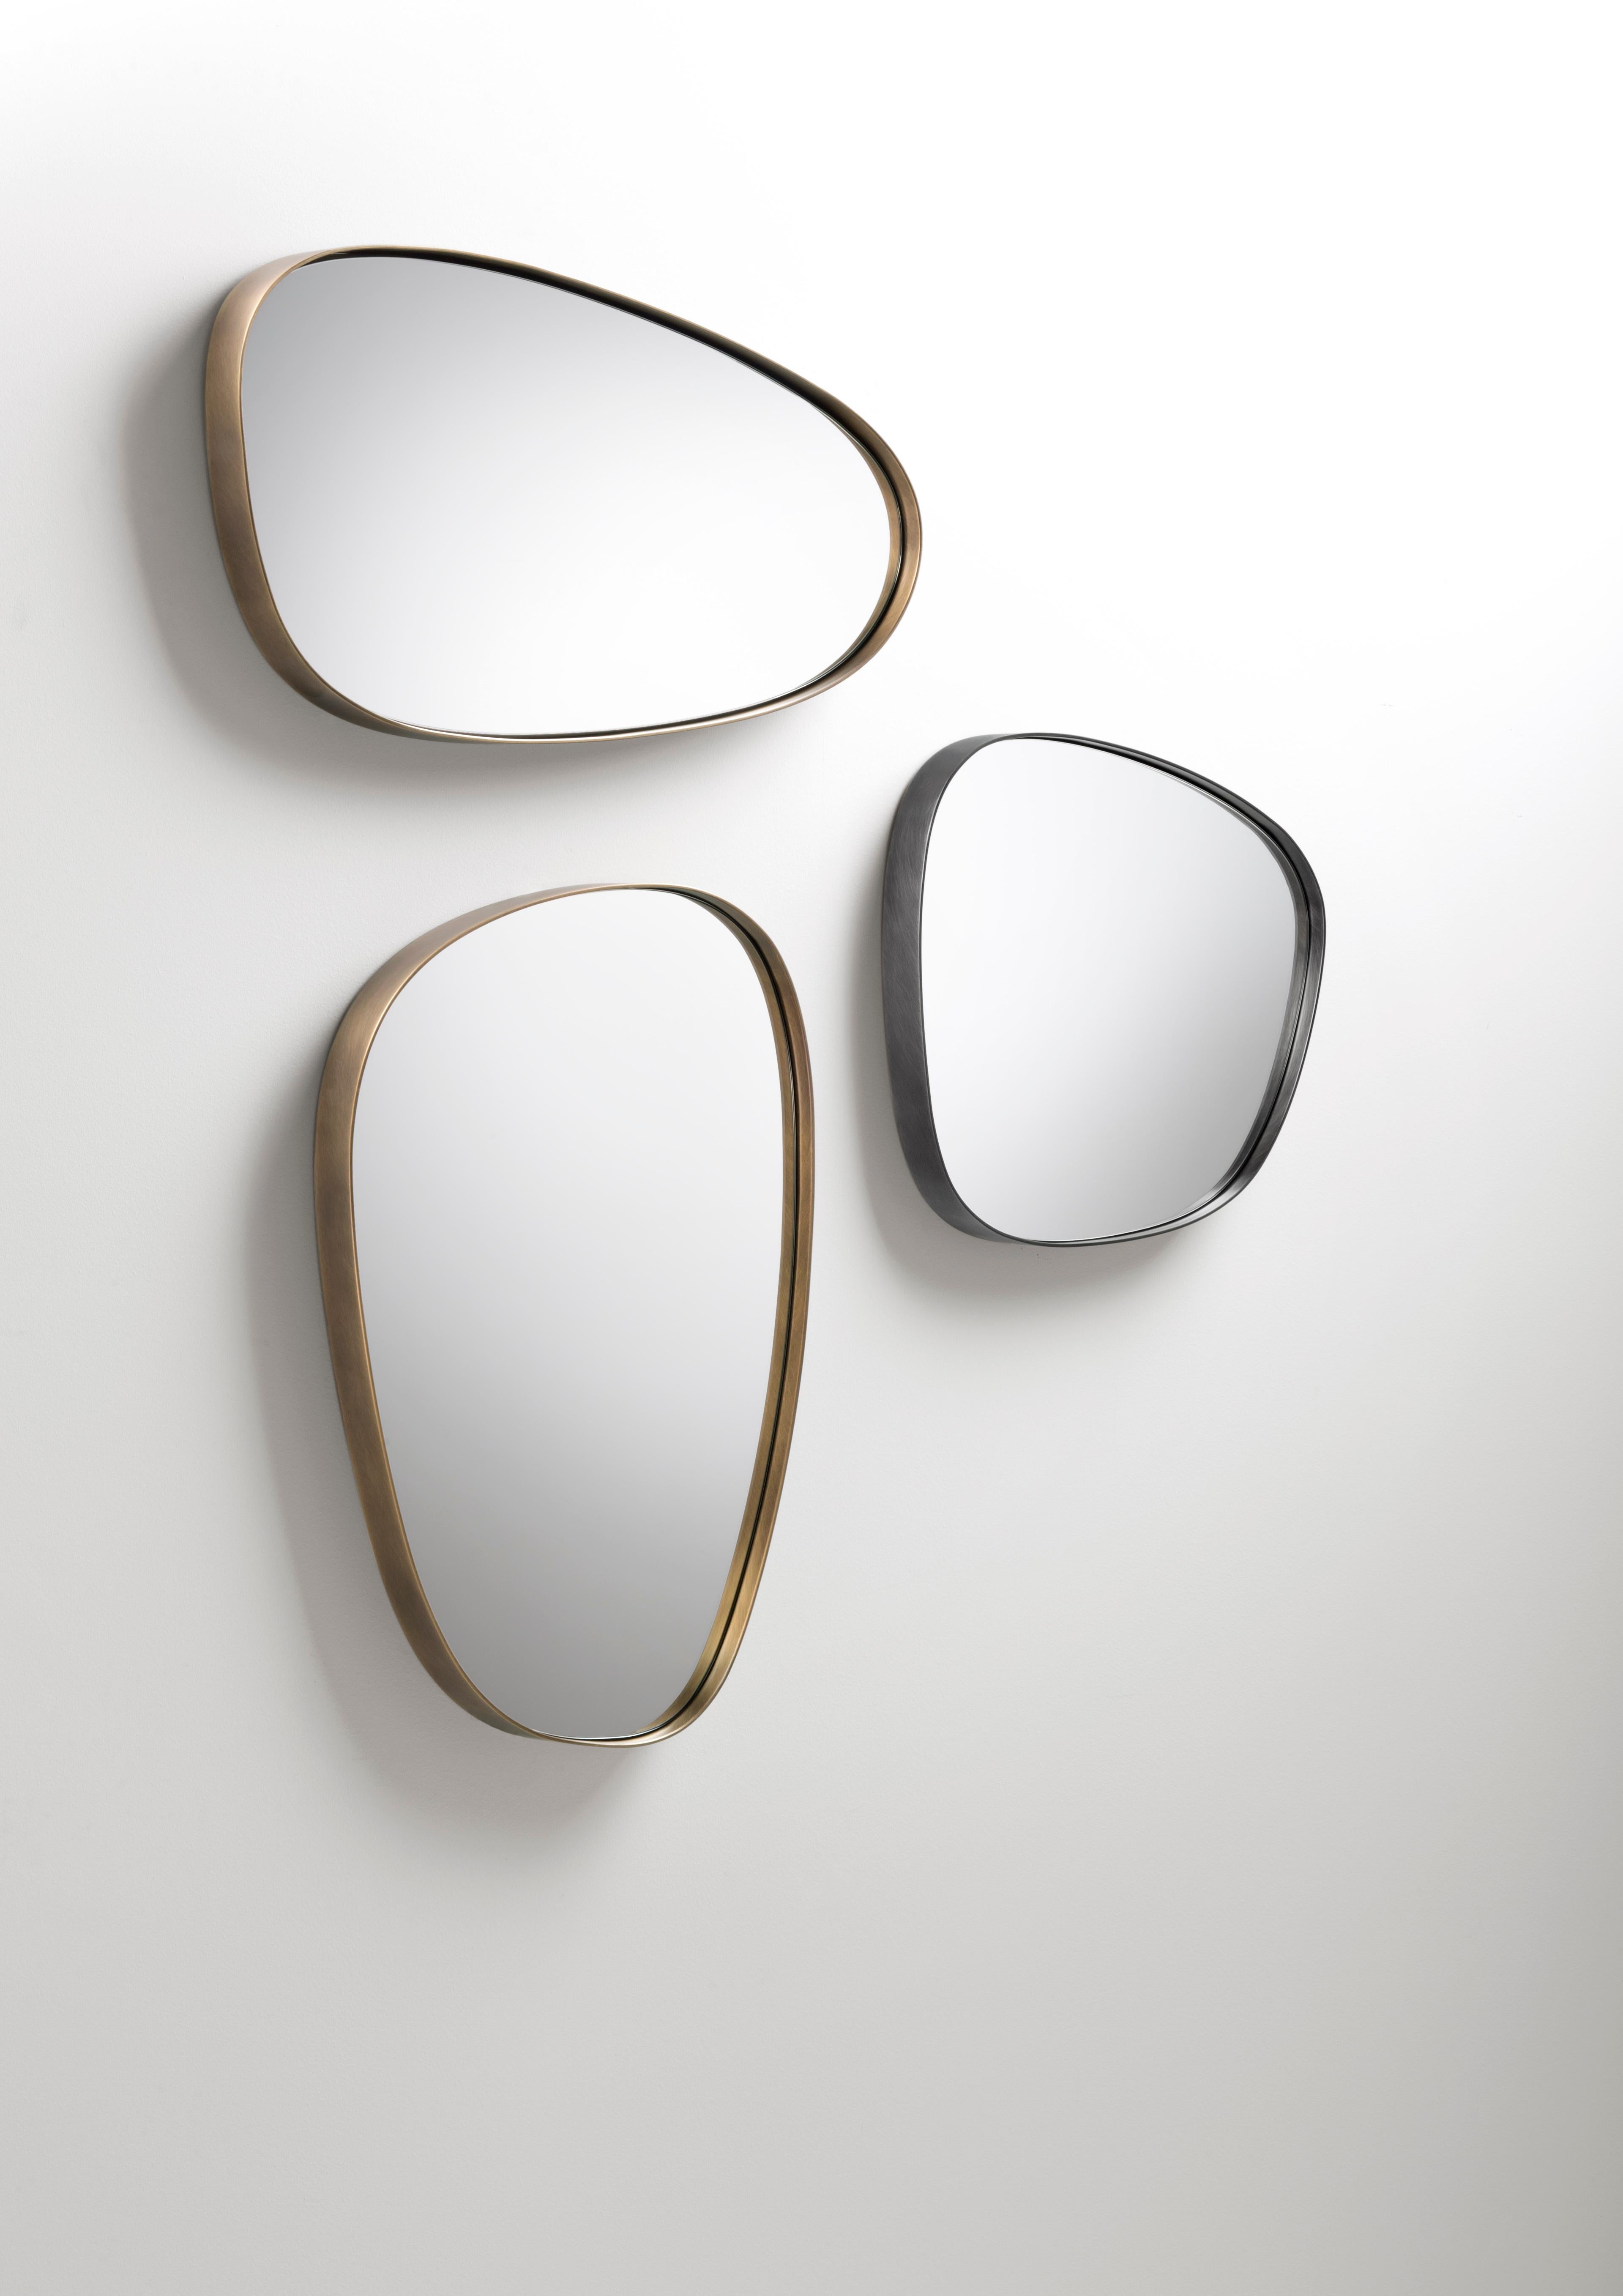 Modern DeCastelli Syro 76 Mirror in Brass Frame by Emilio Nanni For Sale